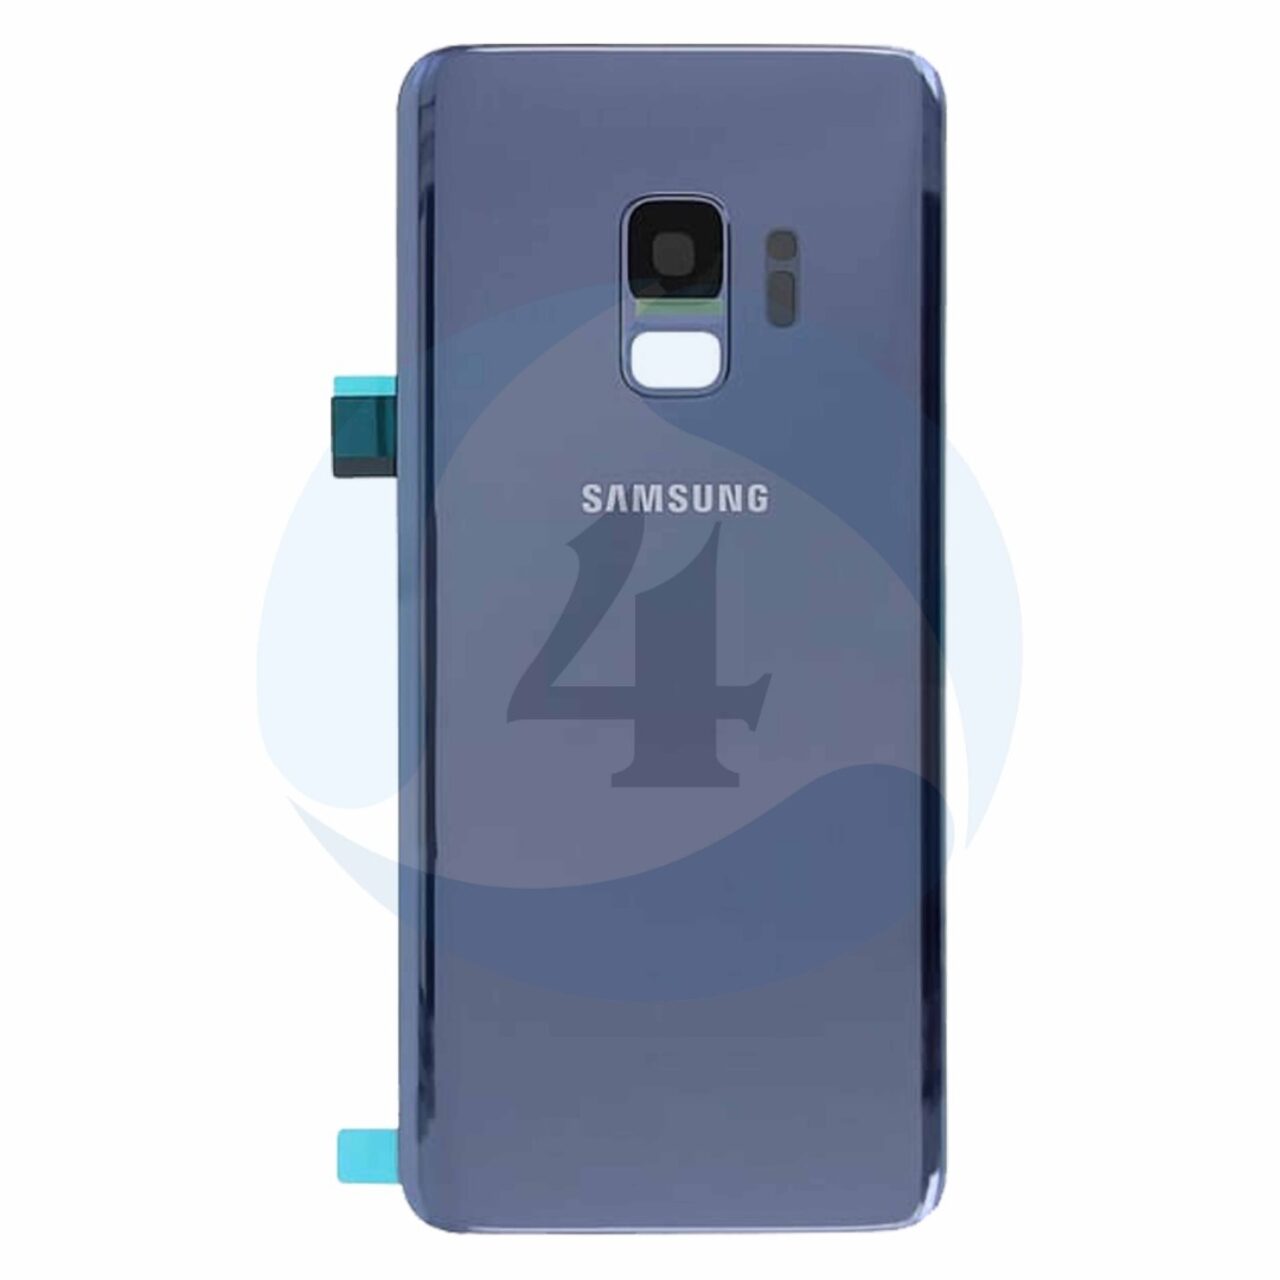 Samsung galaxy s9 sm g960f battery cover blue